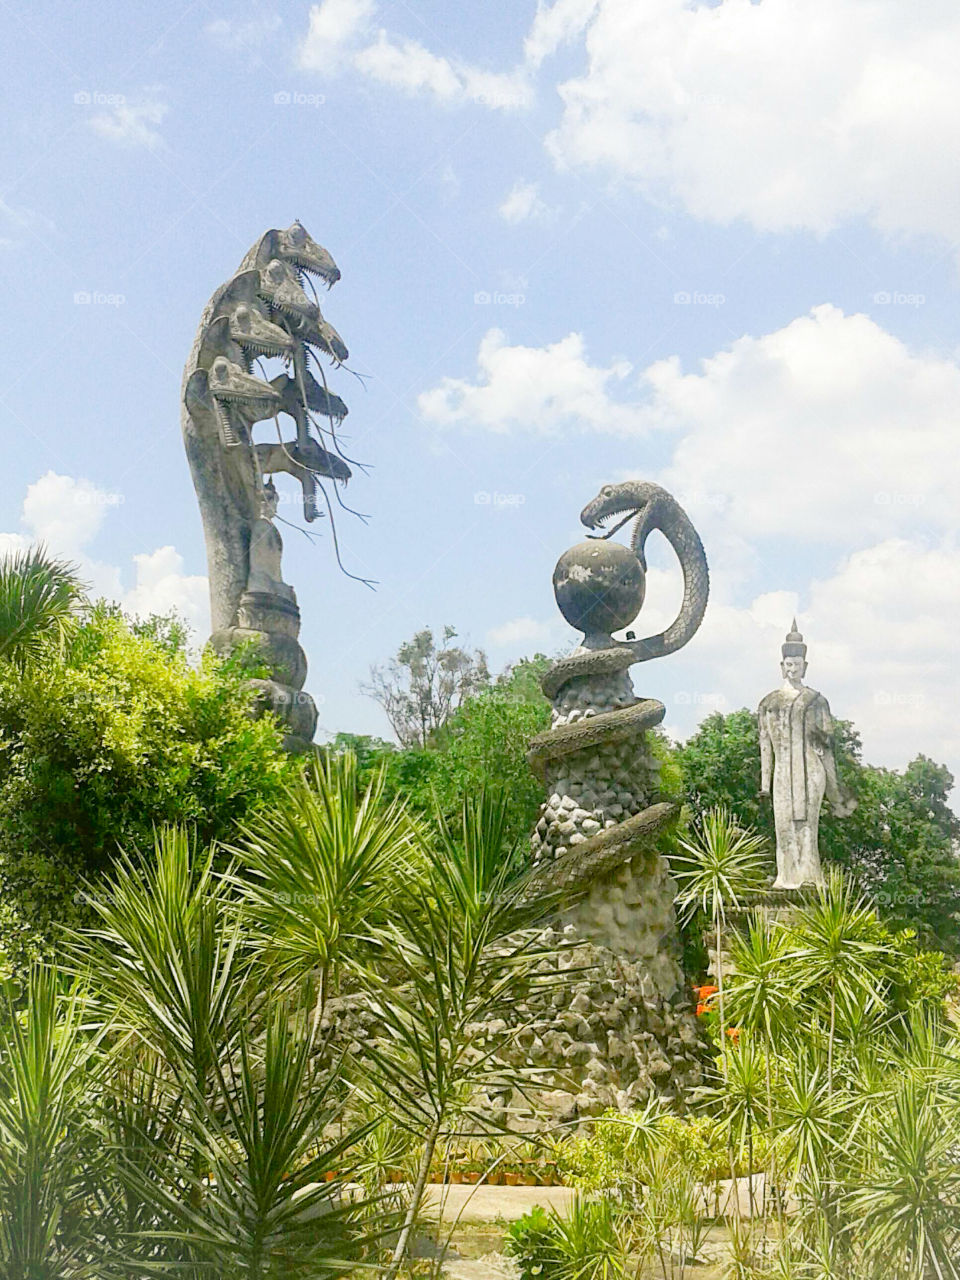 Park. Park, green park, Statue, human statue, statue of a human skeleton, cloud, sky, arts, art